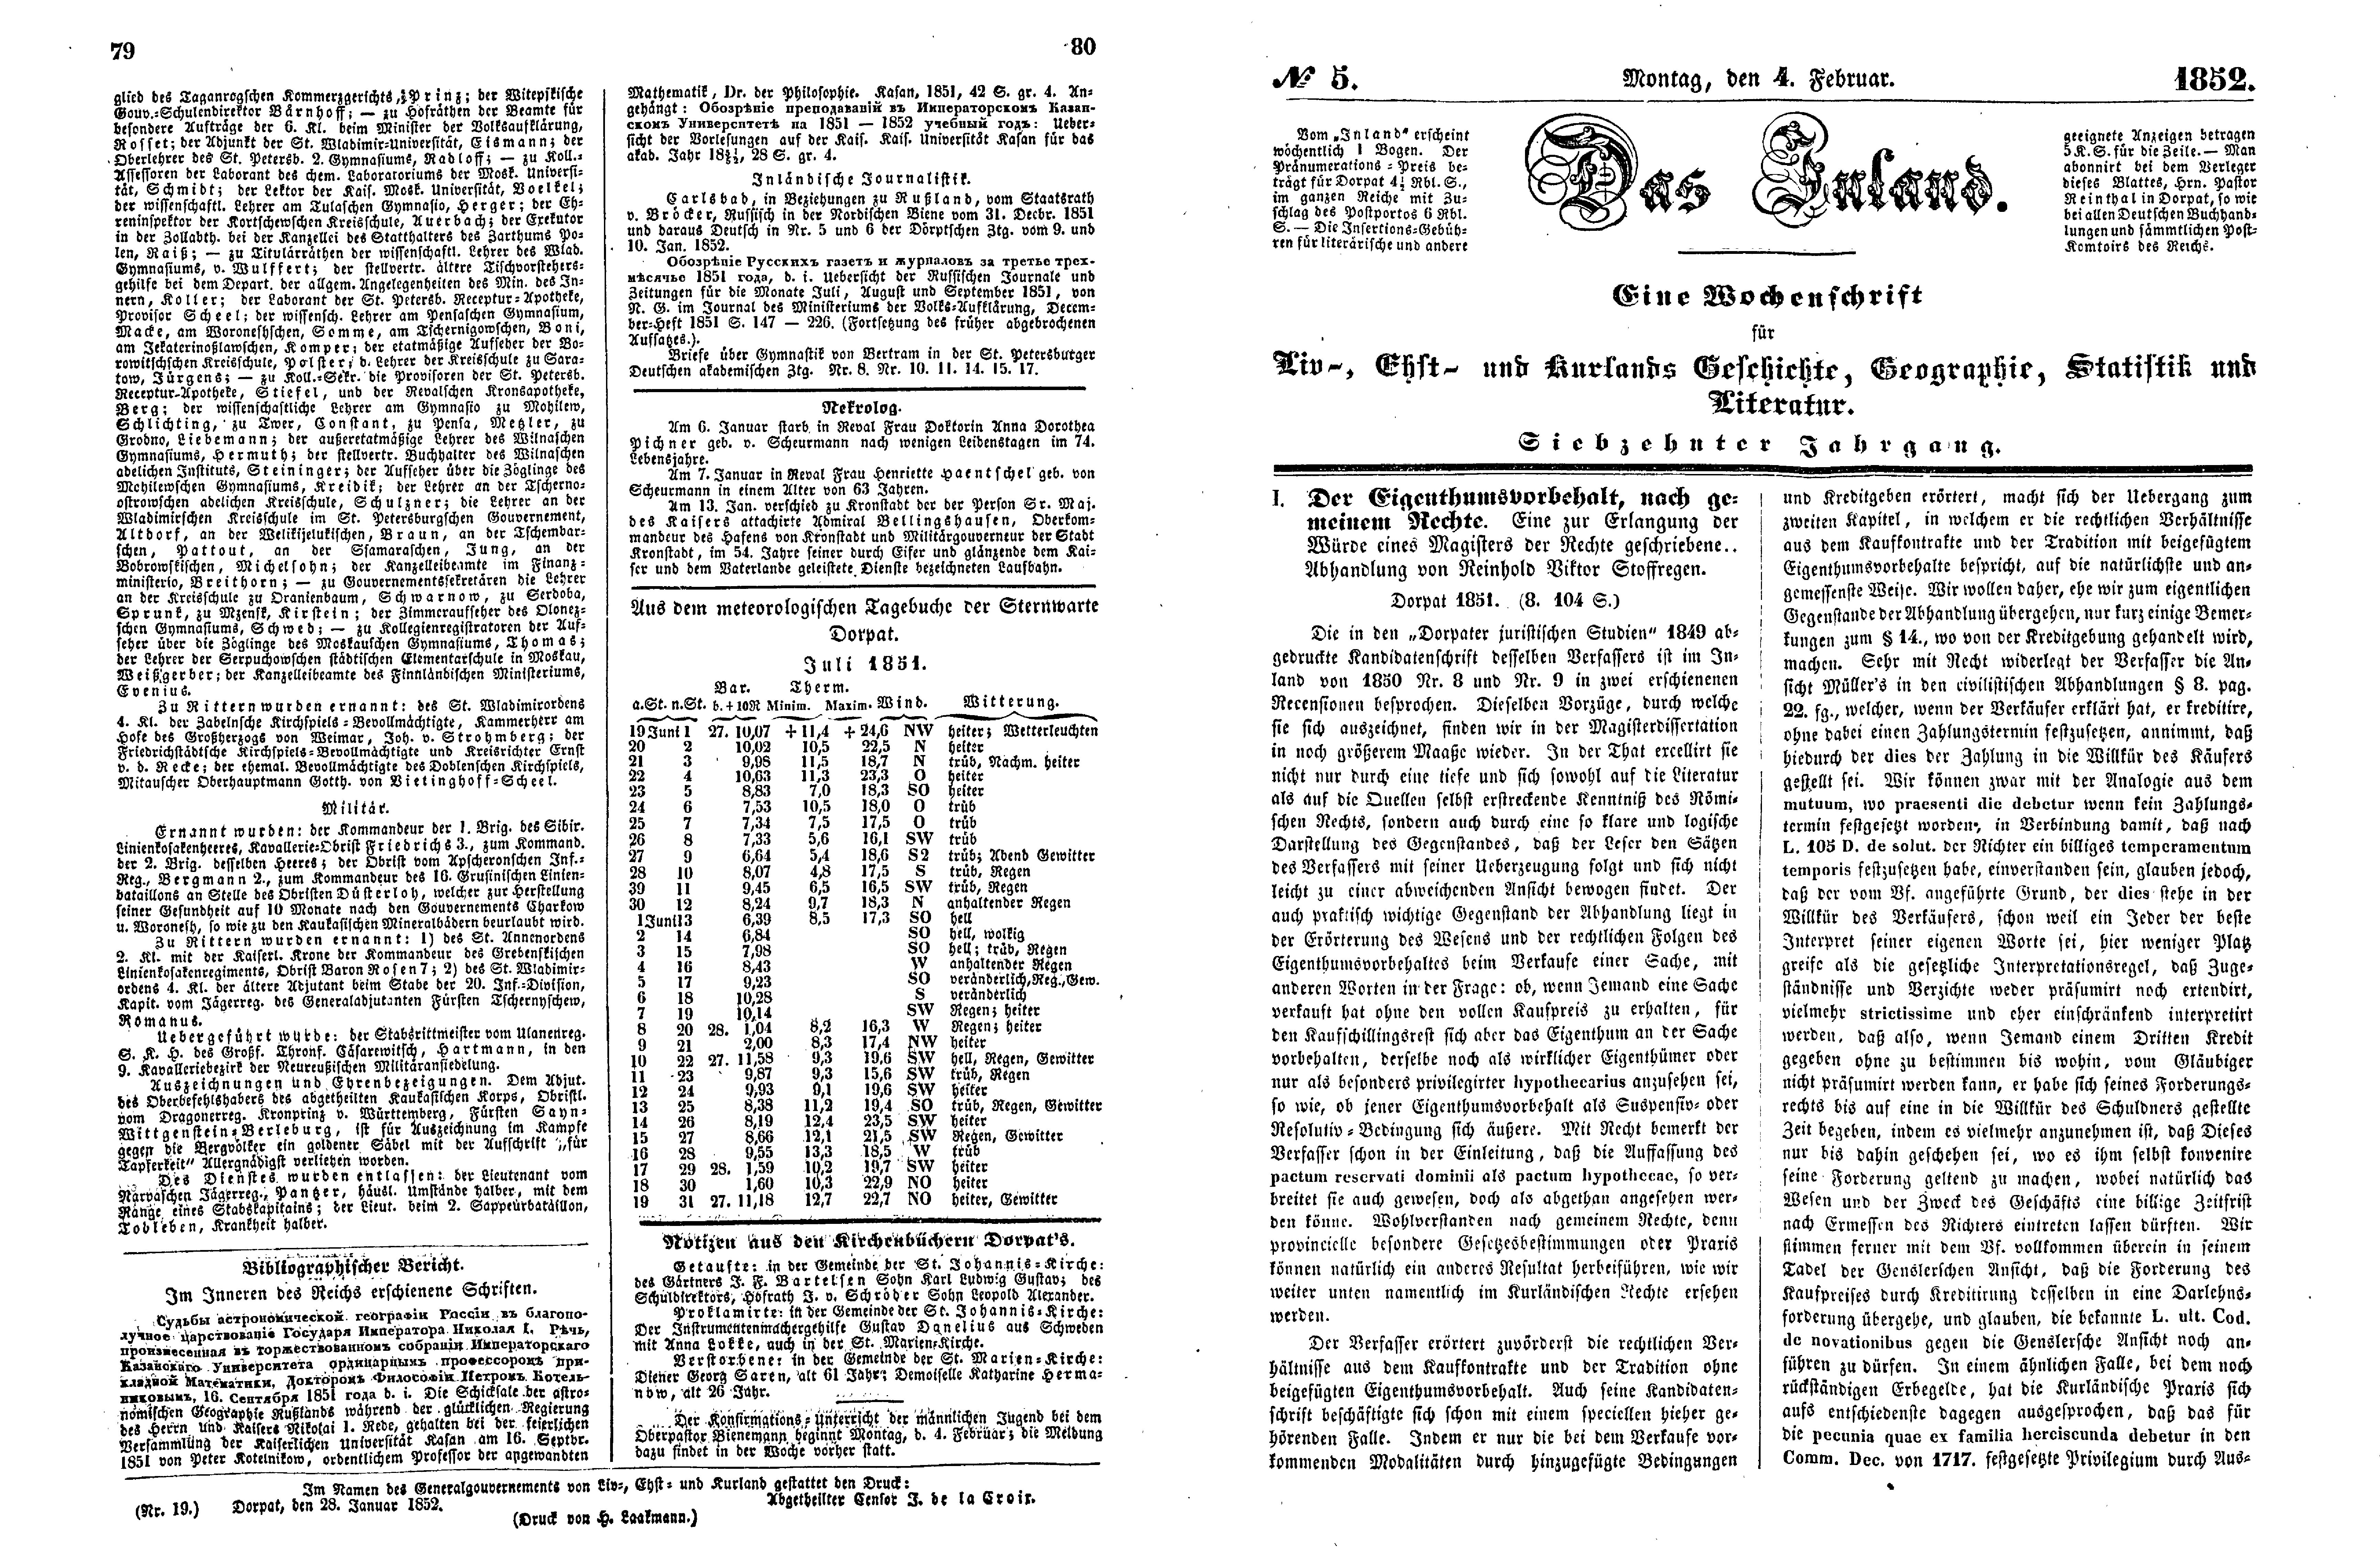 Das Inland [17] (1852) | 24. (79-82) Main body of text